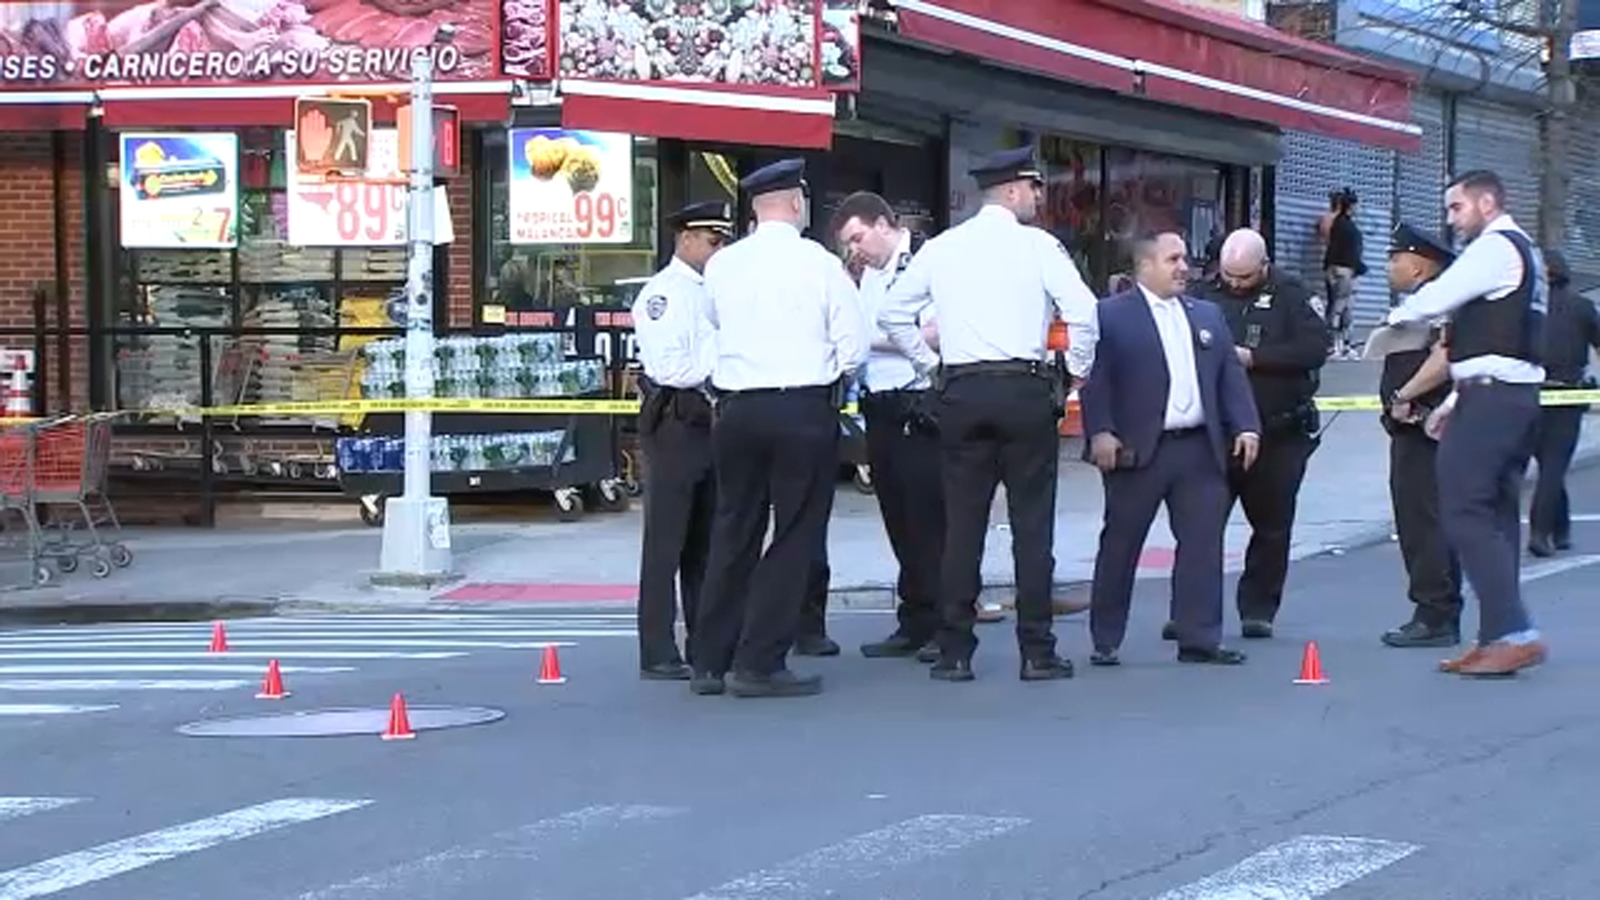 Gunmen Shoot Four, One Fatally in Bronx